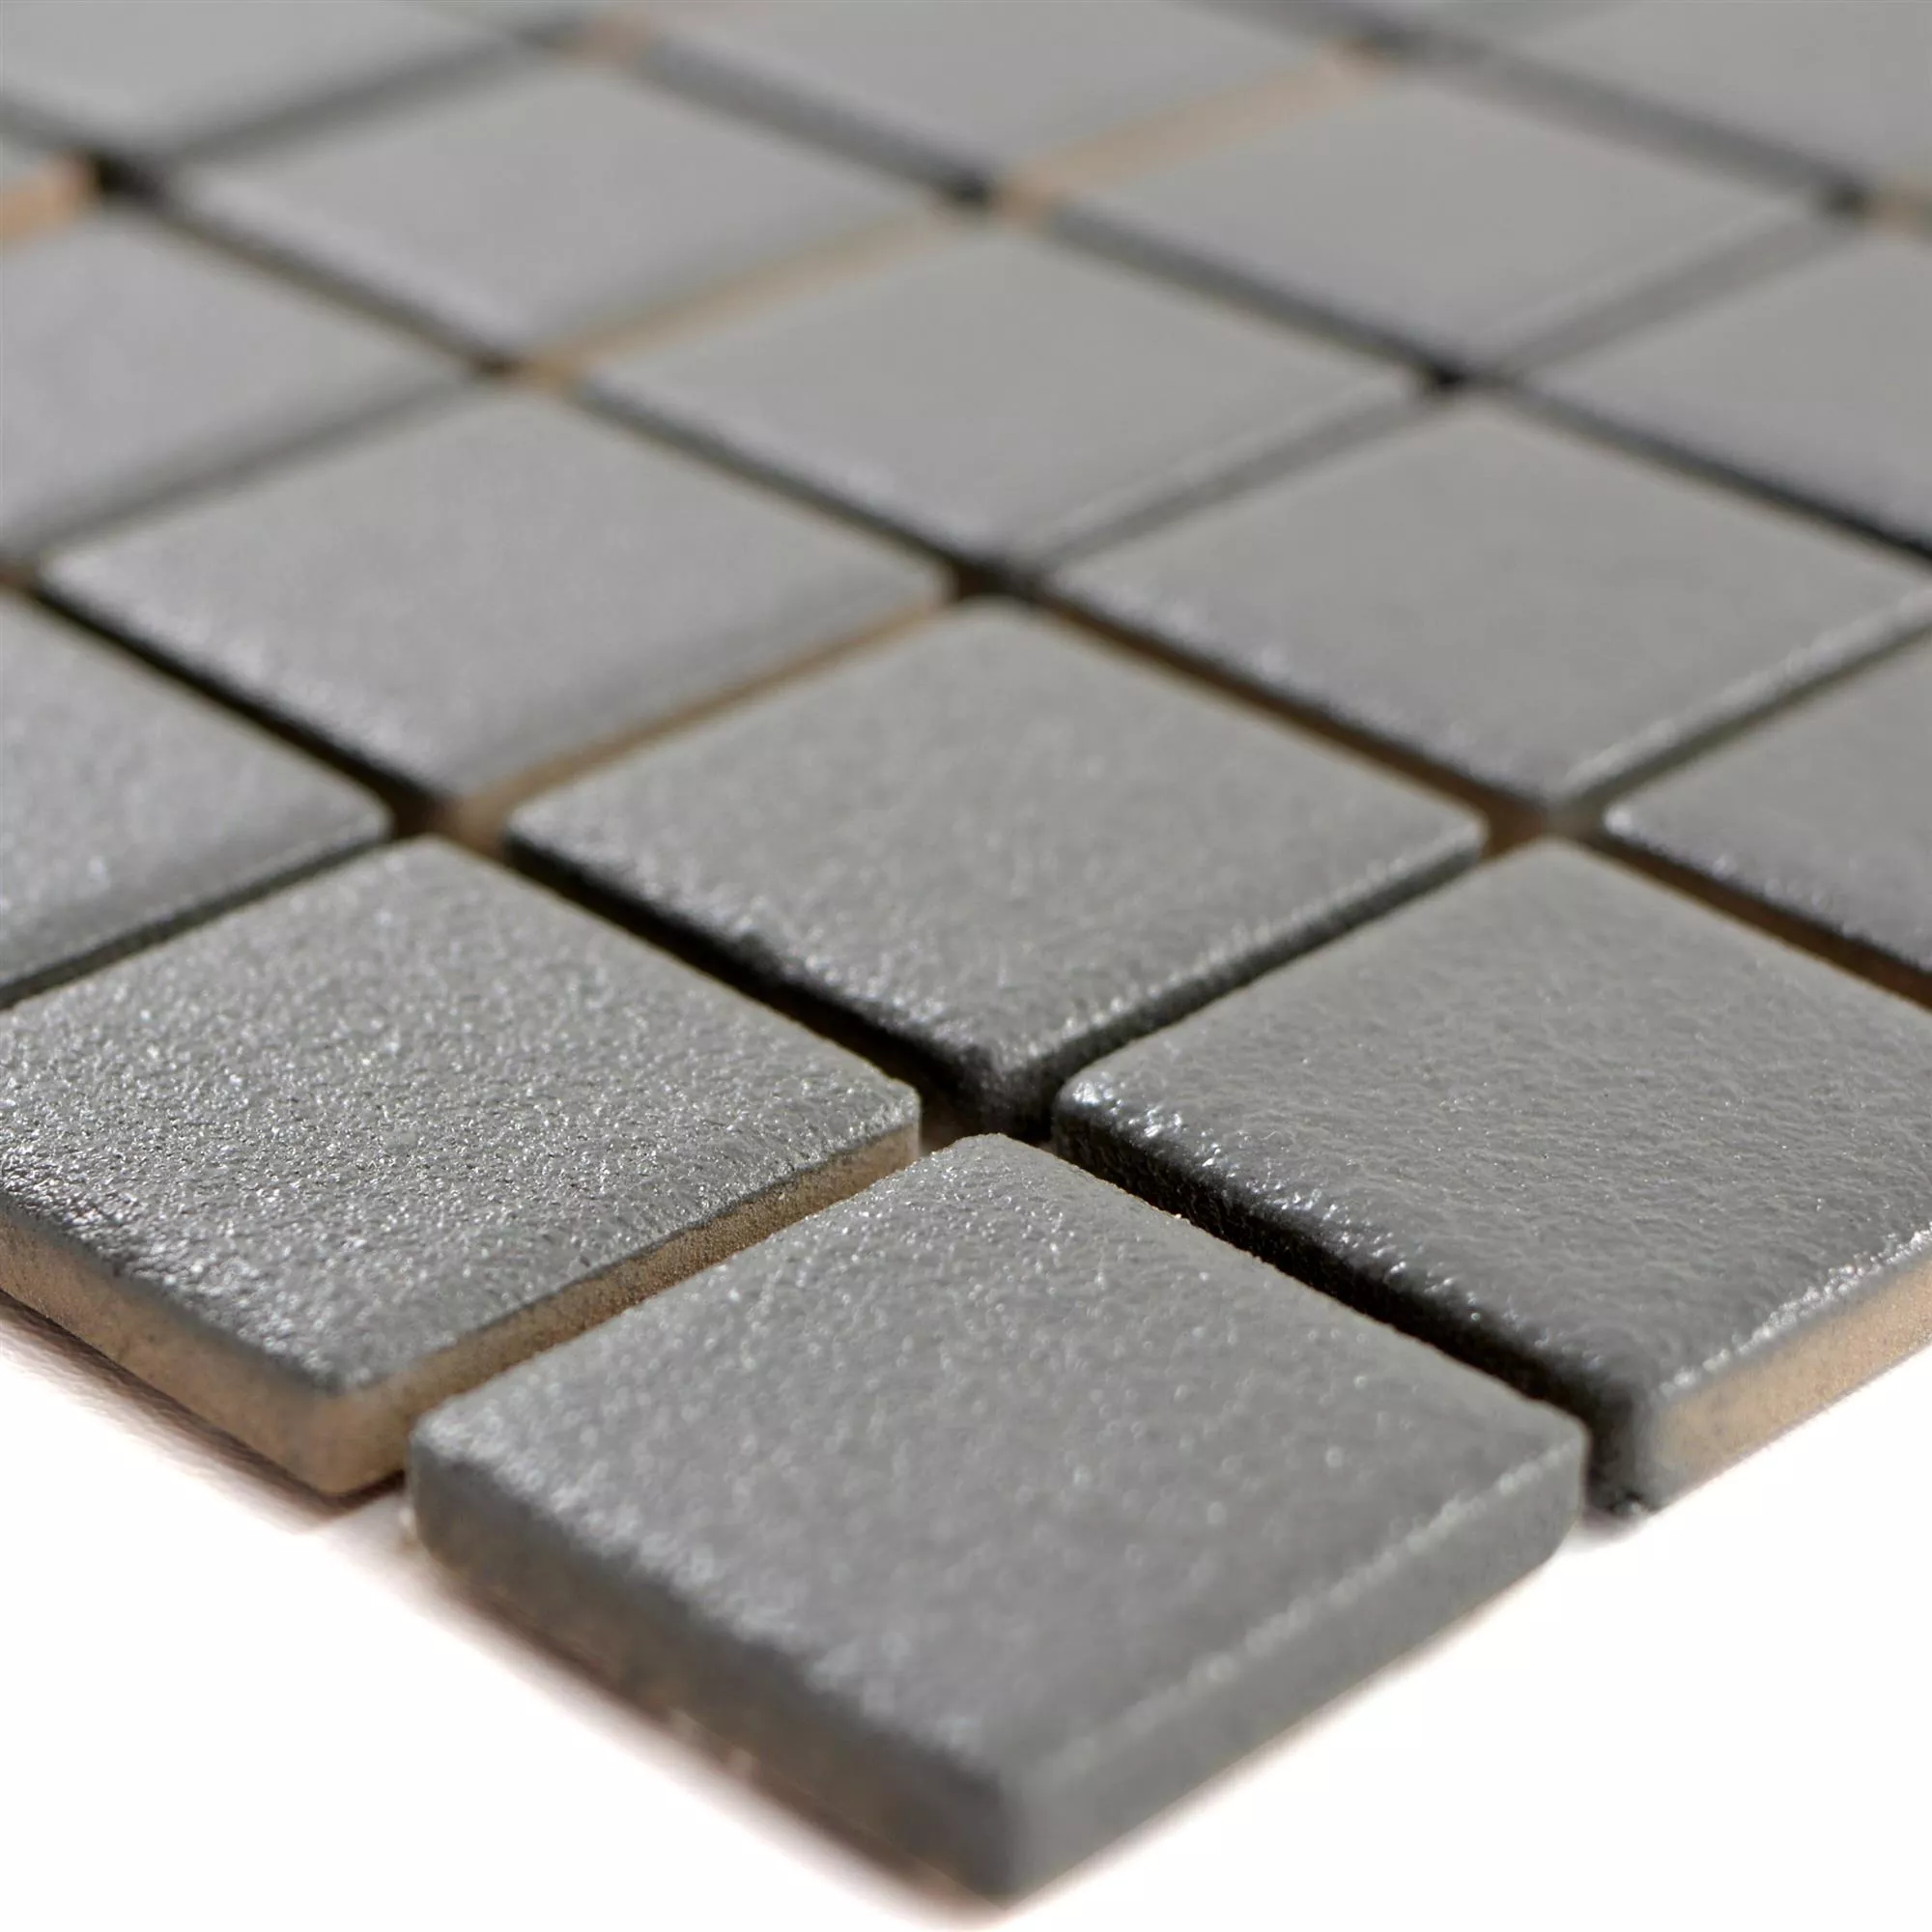 Ceramic Mosaic Tiles Shalin Non-Slip R10 Grey Q25